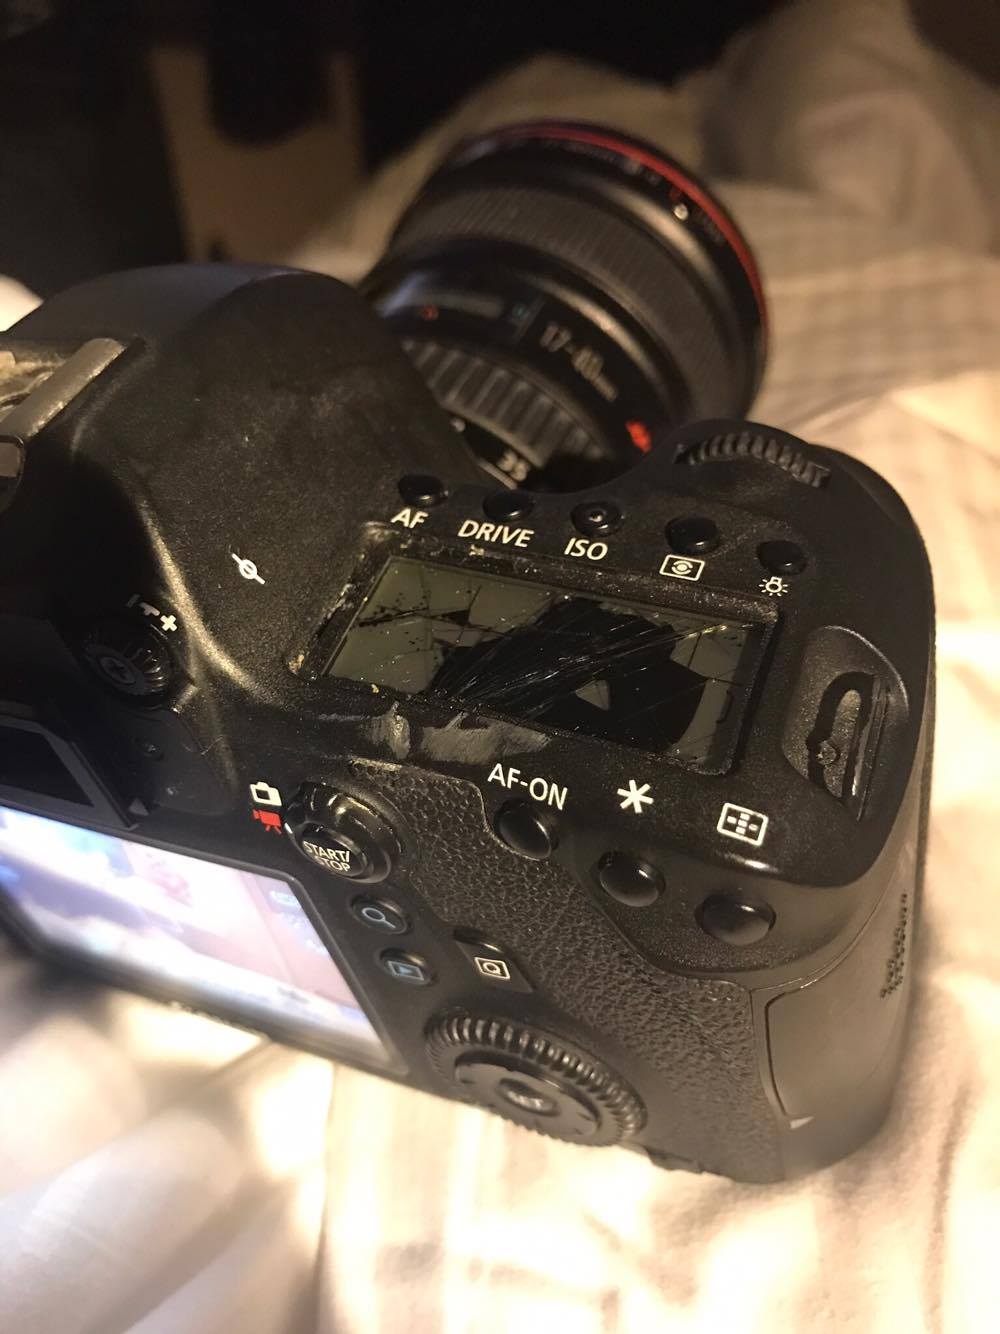 a camera with a broken screen